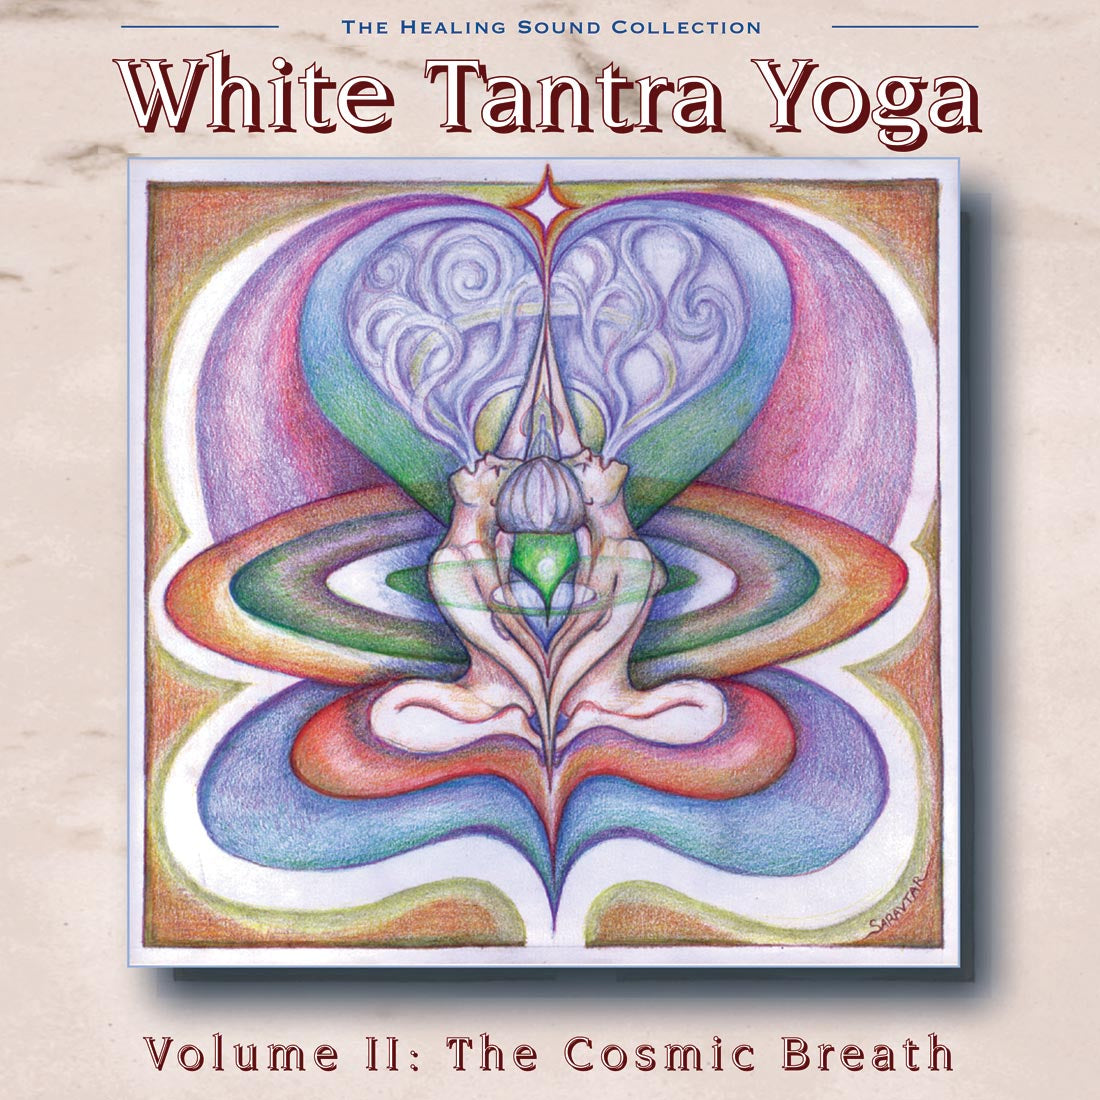 Guru Ram Das Chant - Weisses Tantra Yoga Version